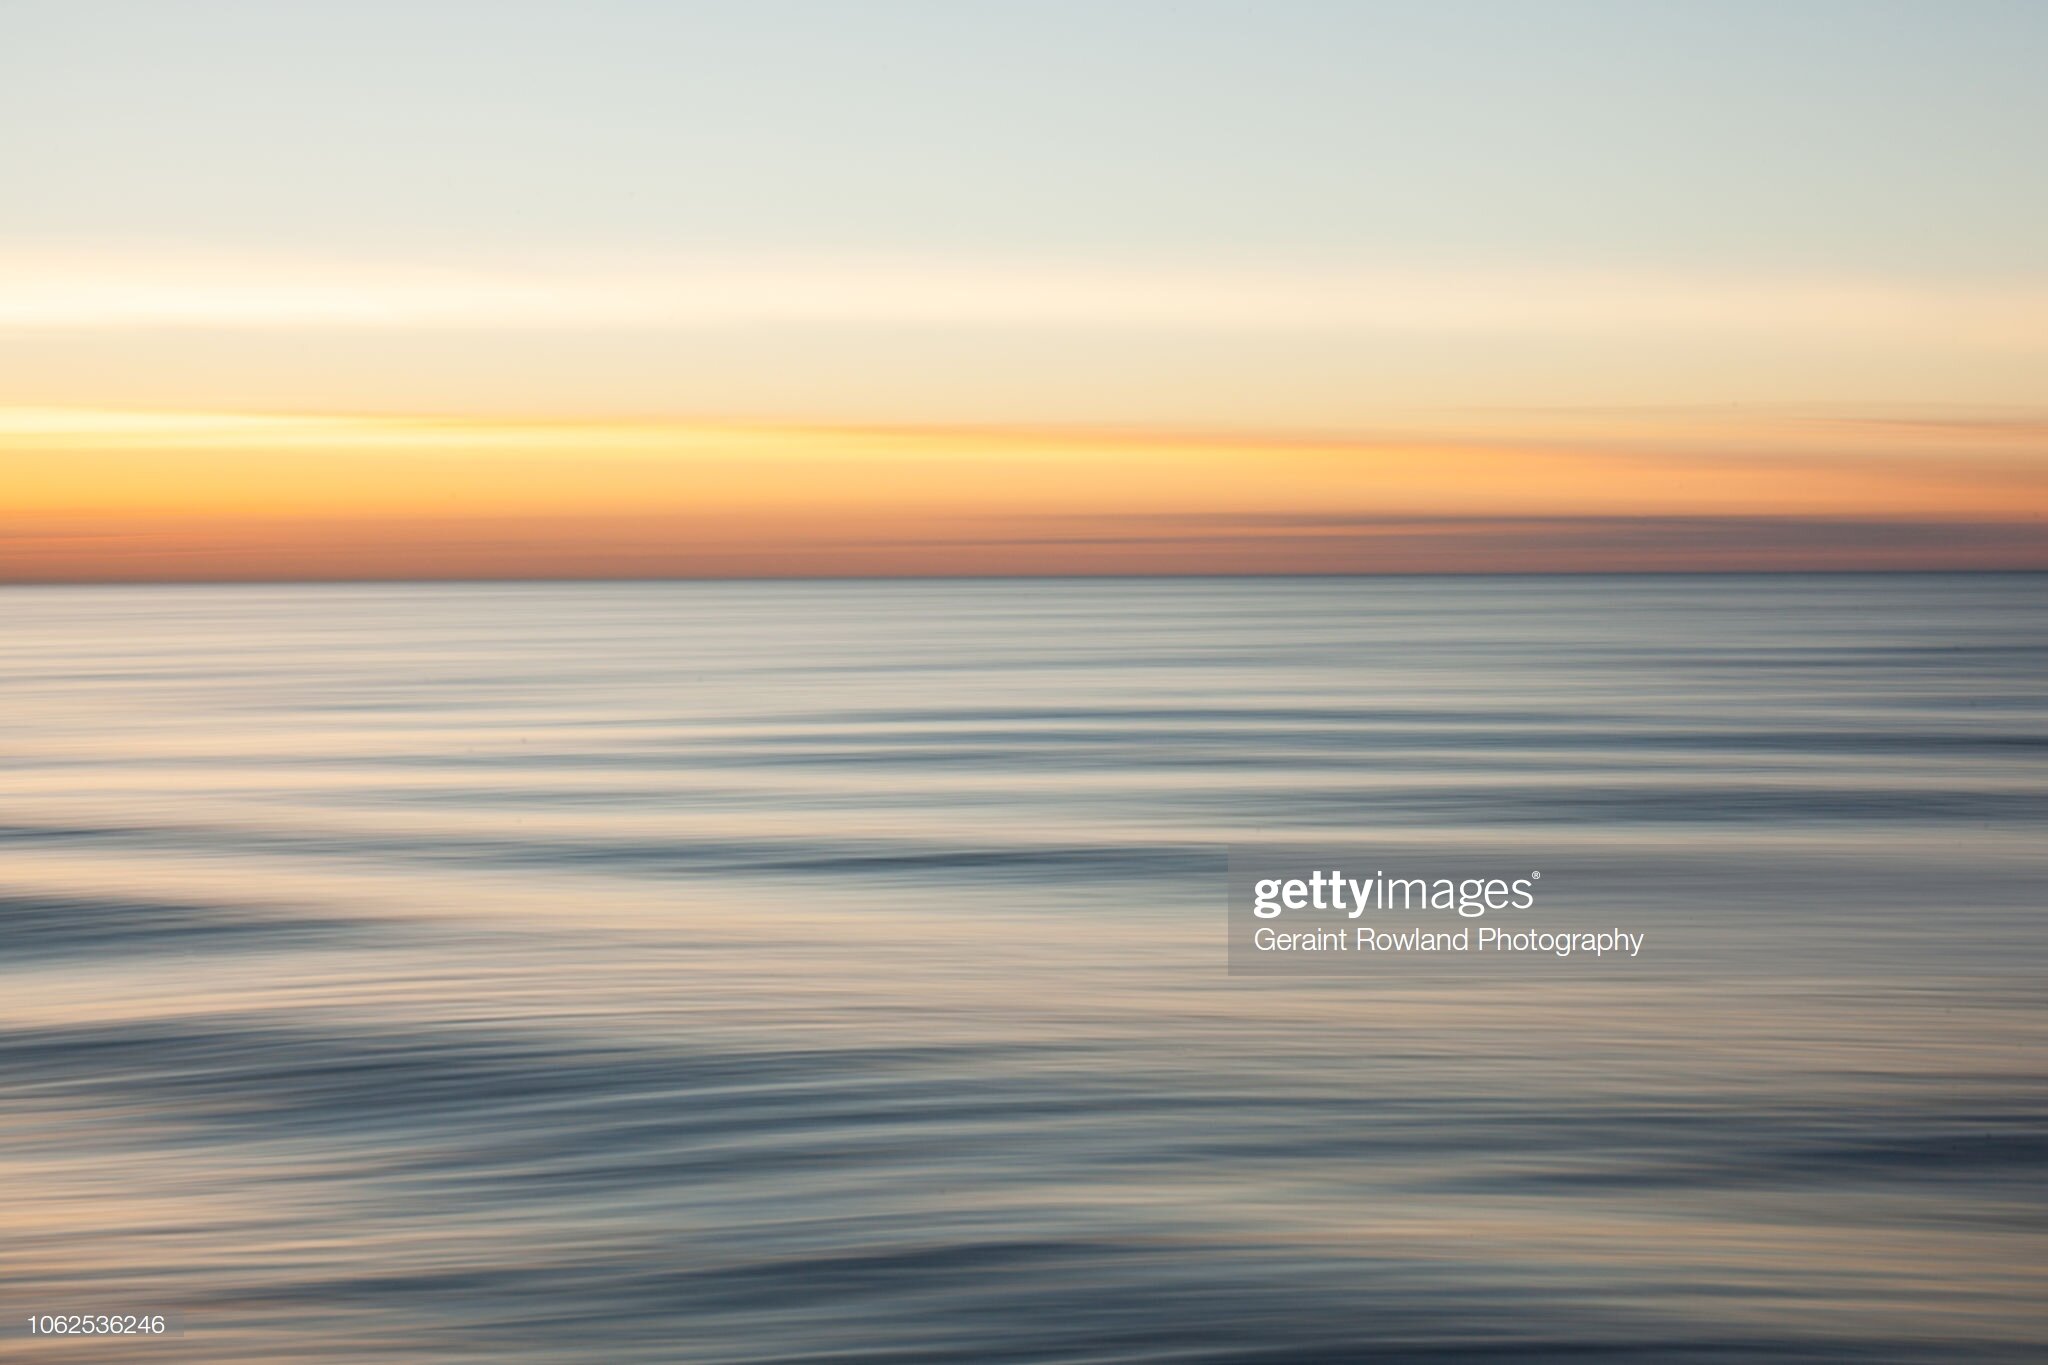 Ocean sunset art image.